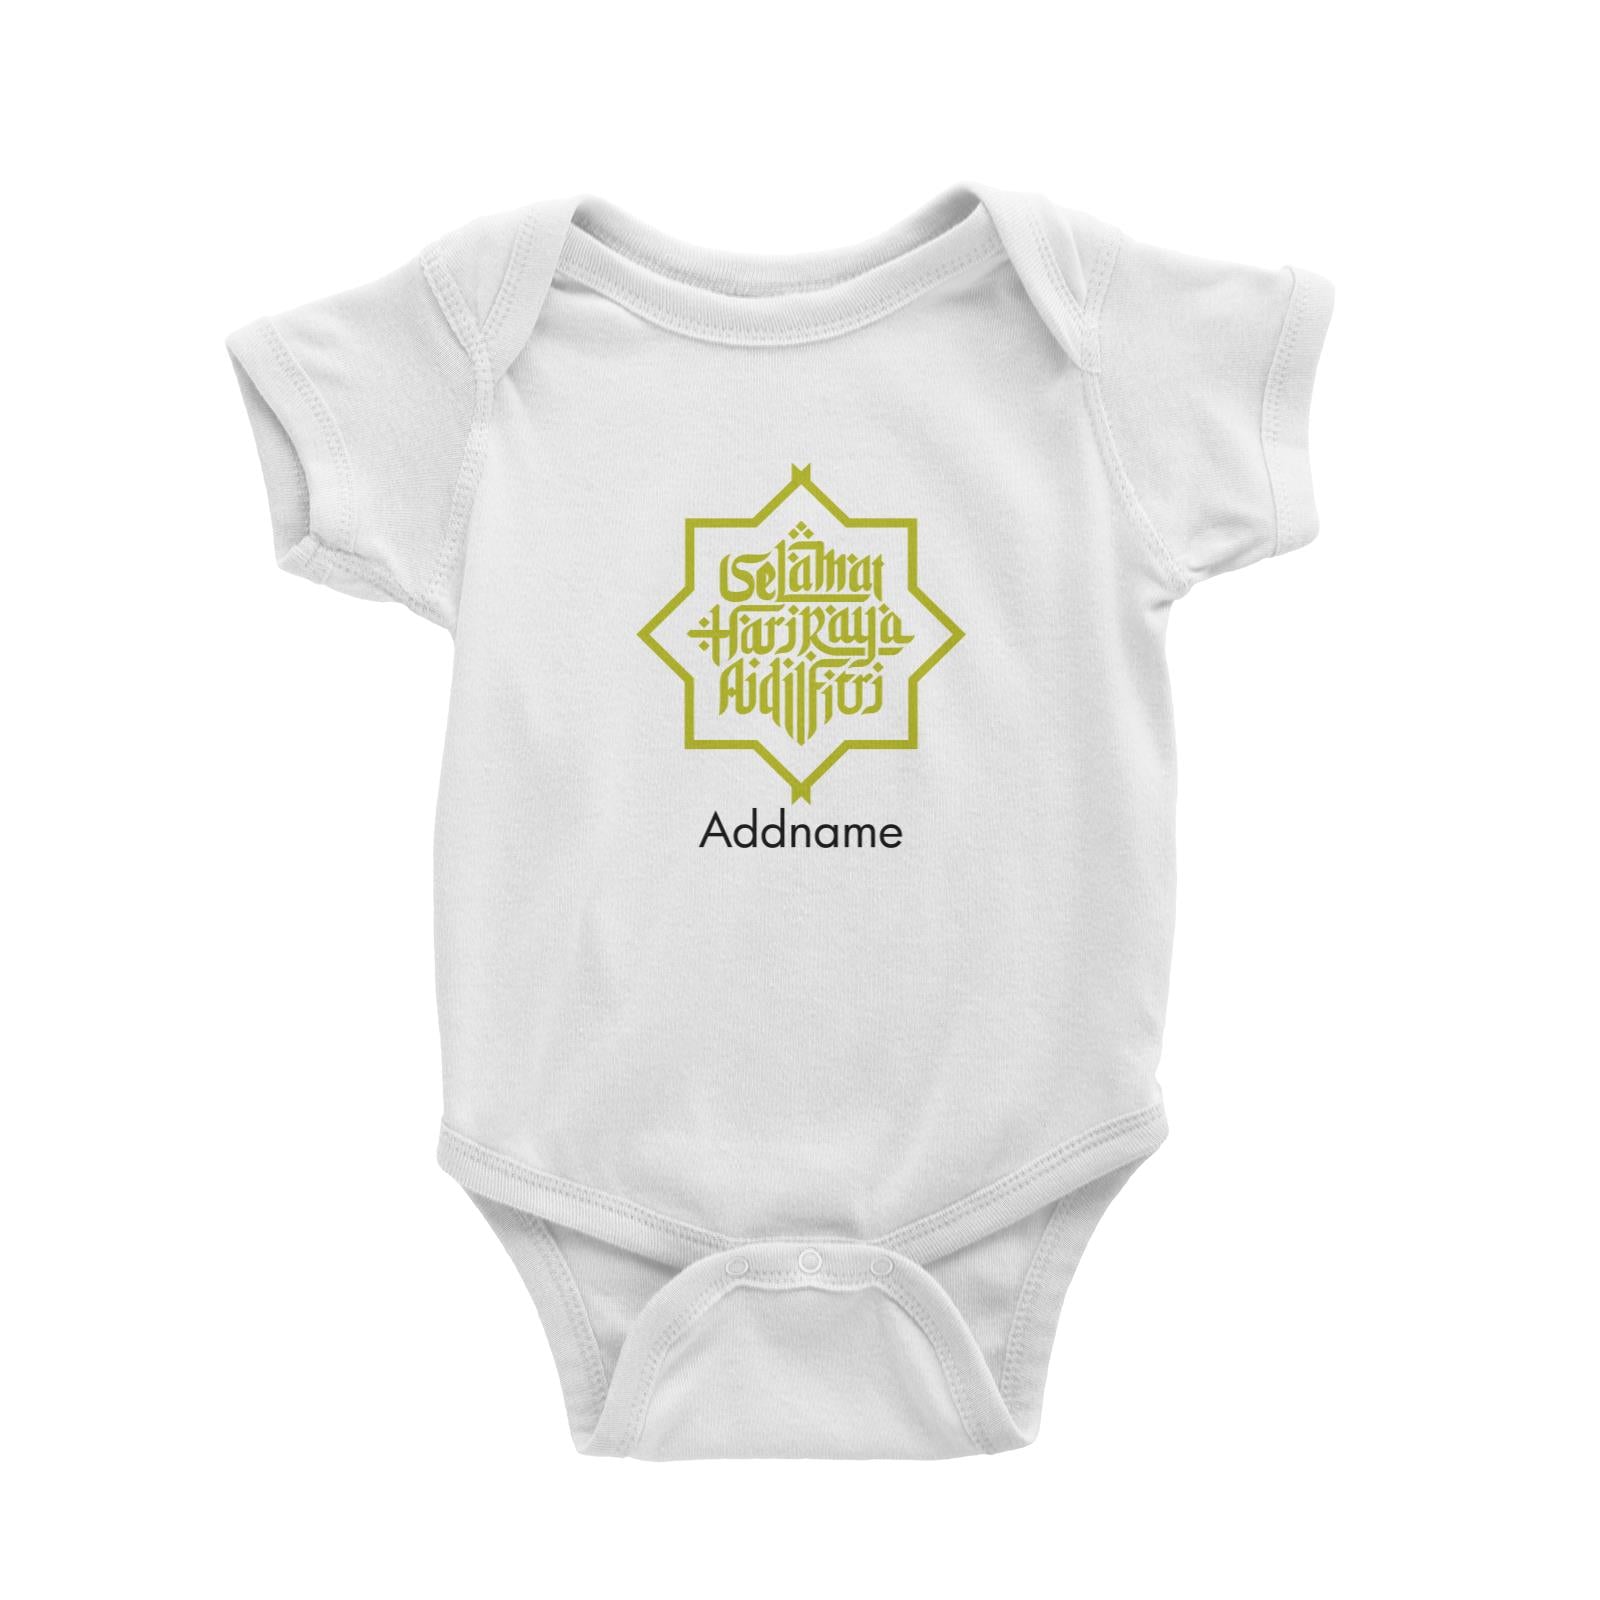 Selamat Hari Raya Aidilfitri Jawi Typography Baby Romper